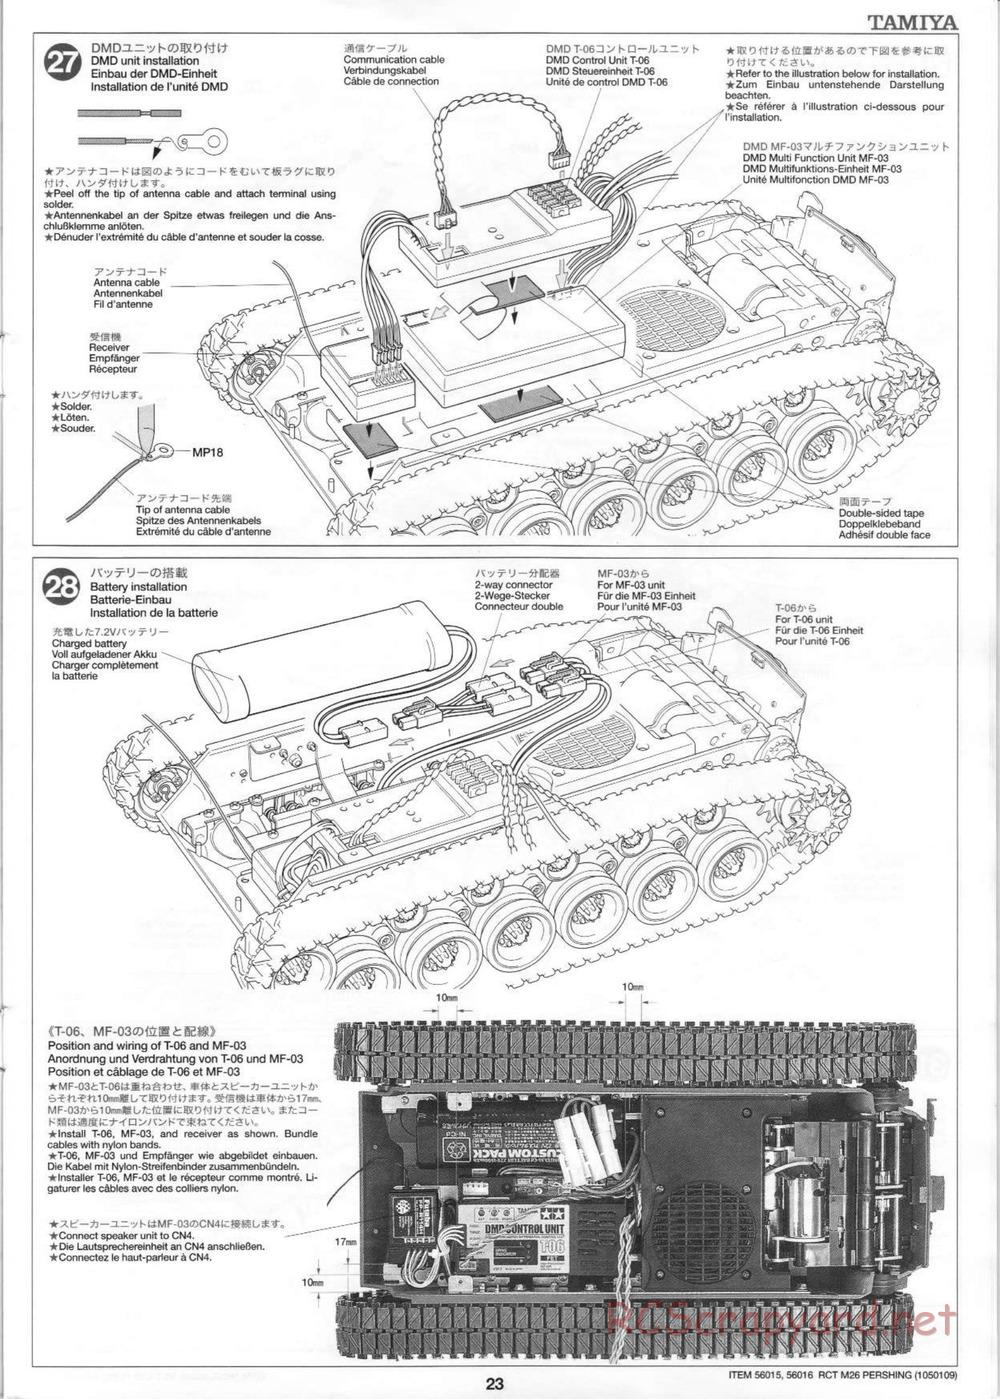 Tamiya - M26 Pershing - 1/16 Scale Chassis - Manual - Page 23